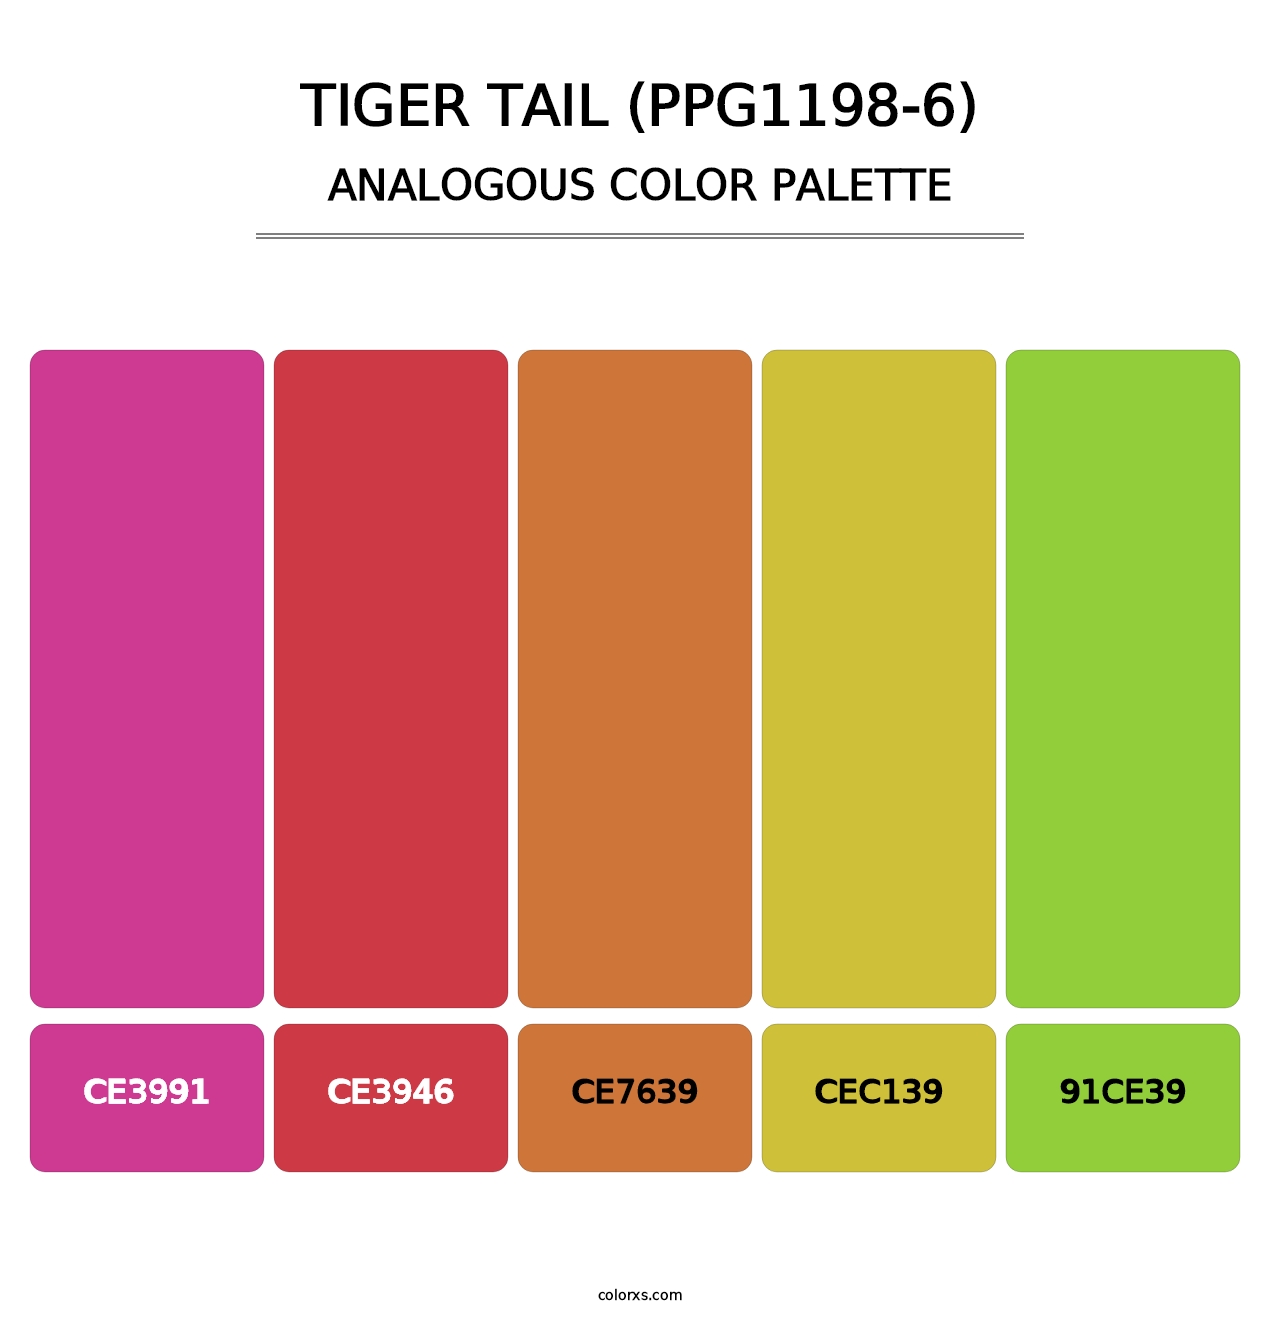 Tiger Tail (PPG1198-6) - Analogous Color Palette